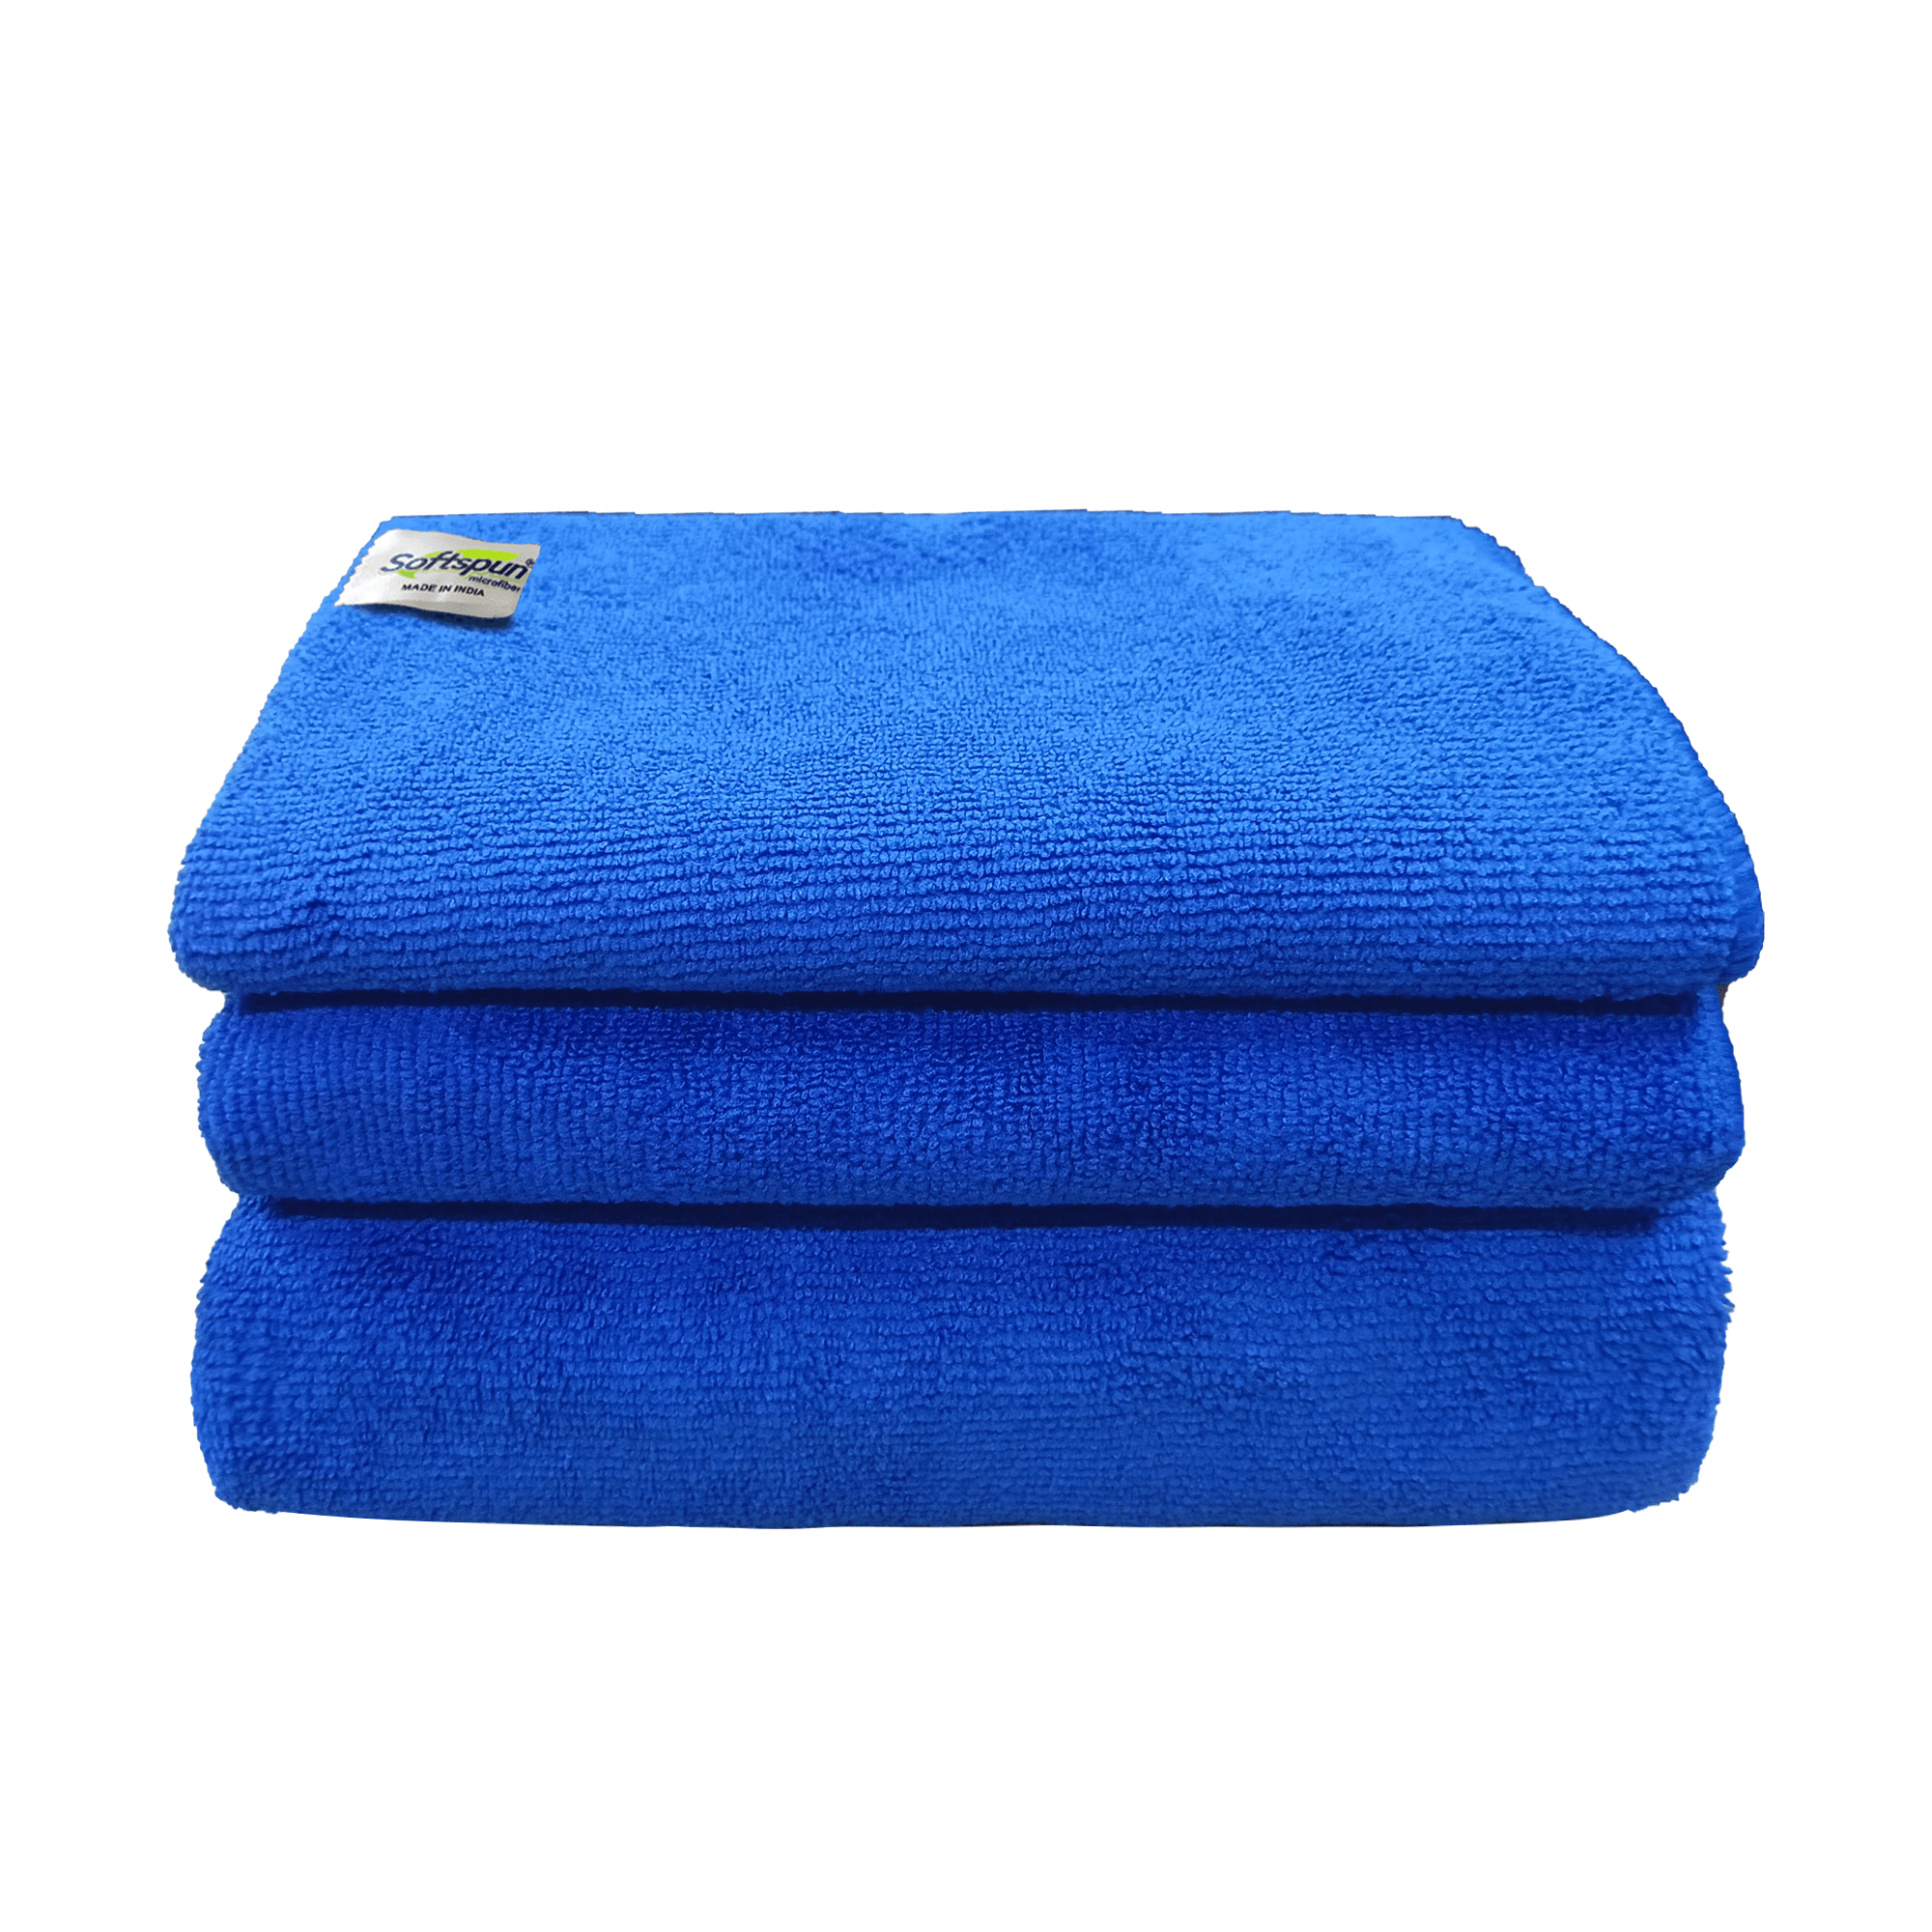  Microfiber Bath Towels